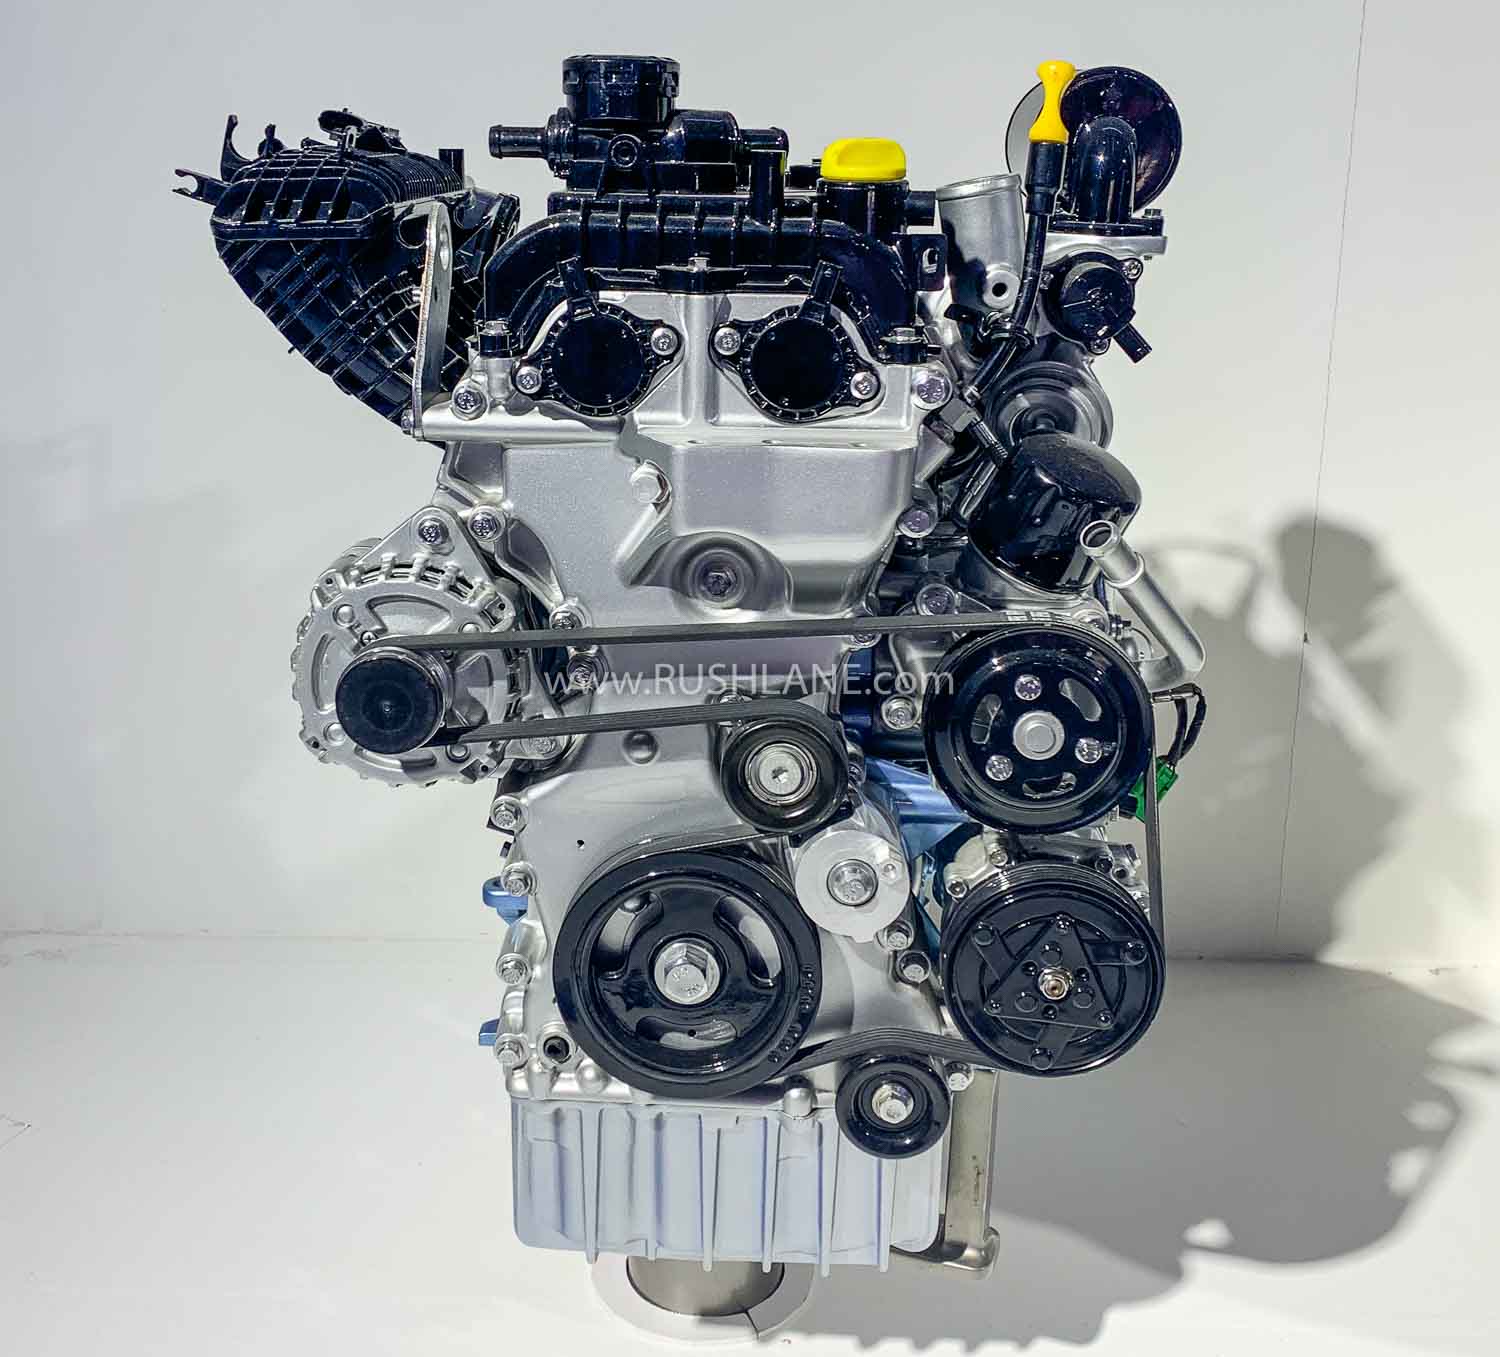 Mahindra's new 1.2 liter petrol mStallion engine